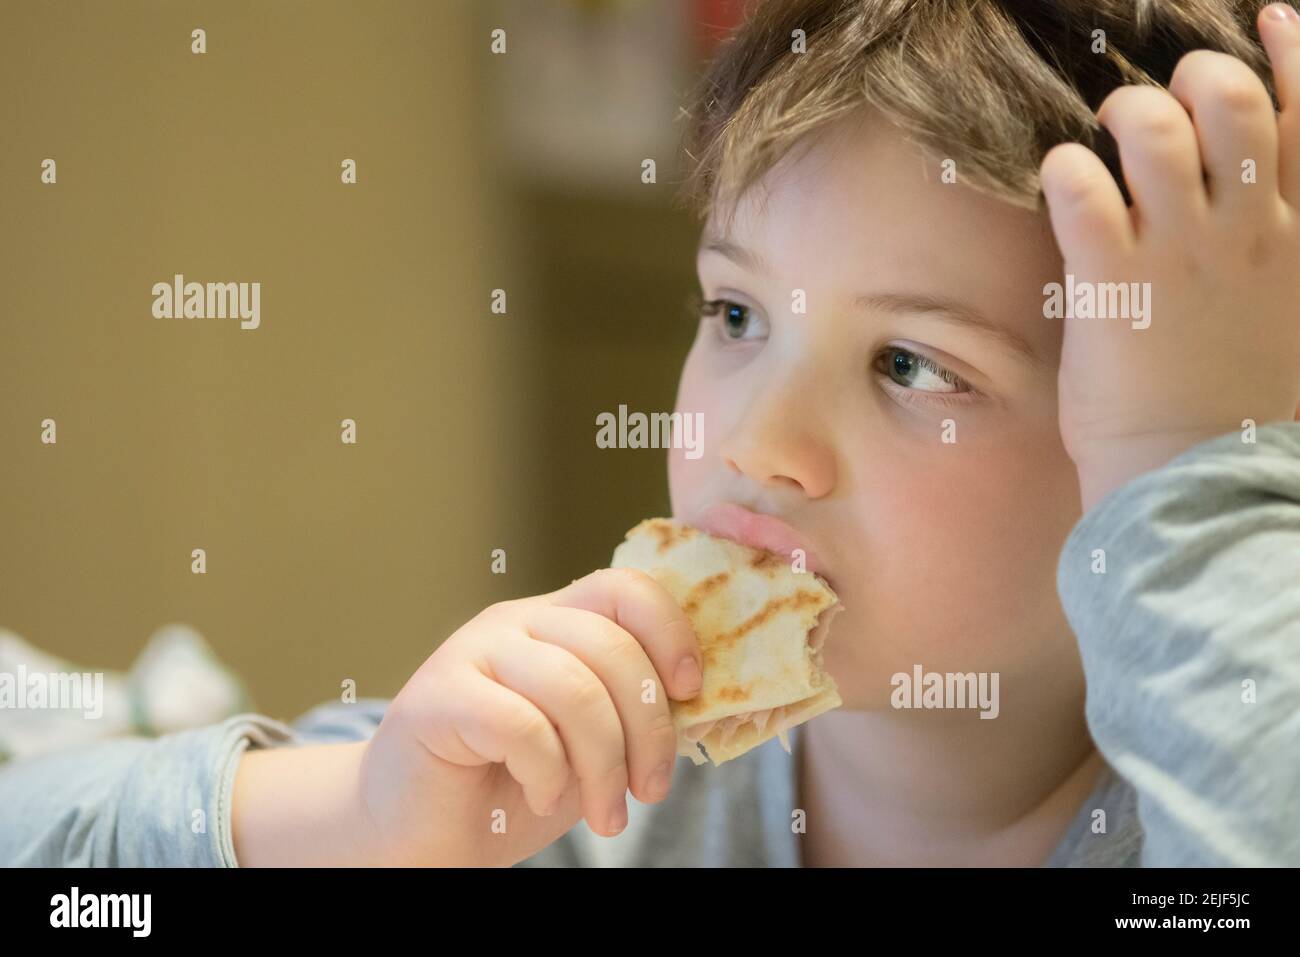 Boy Eating Piadina While Watching TV at Home Stock Photo